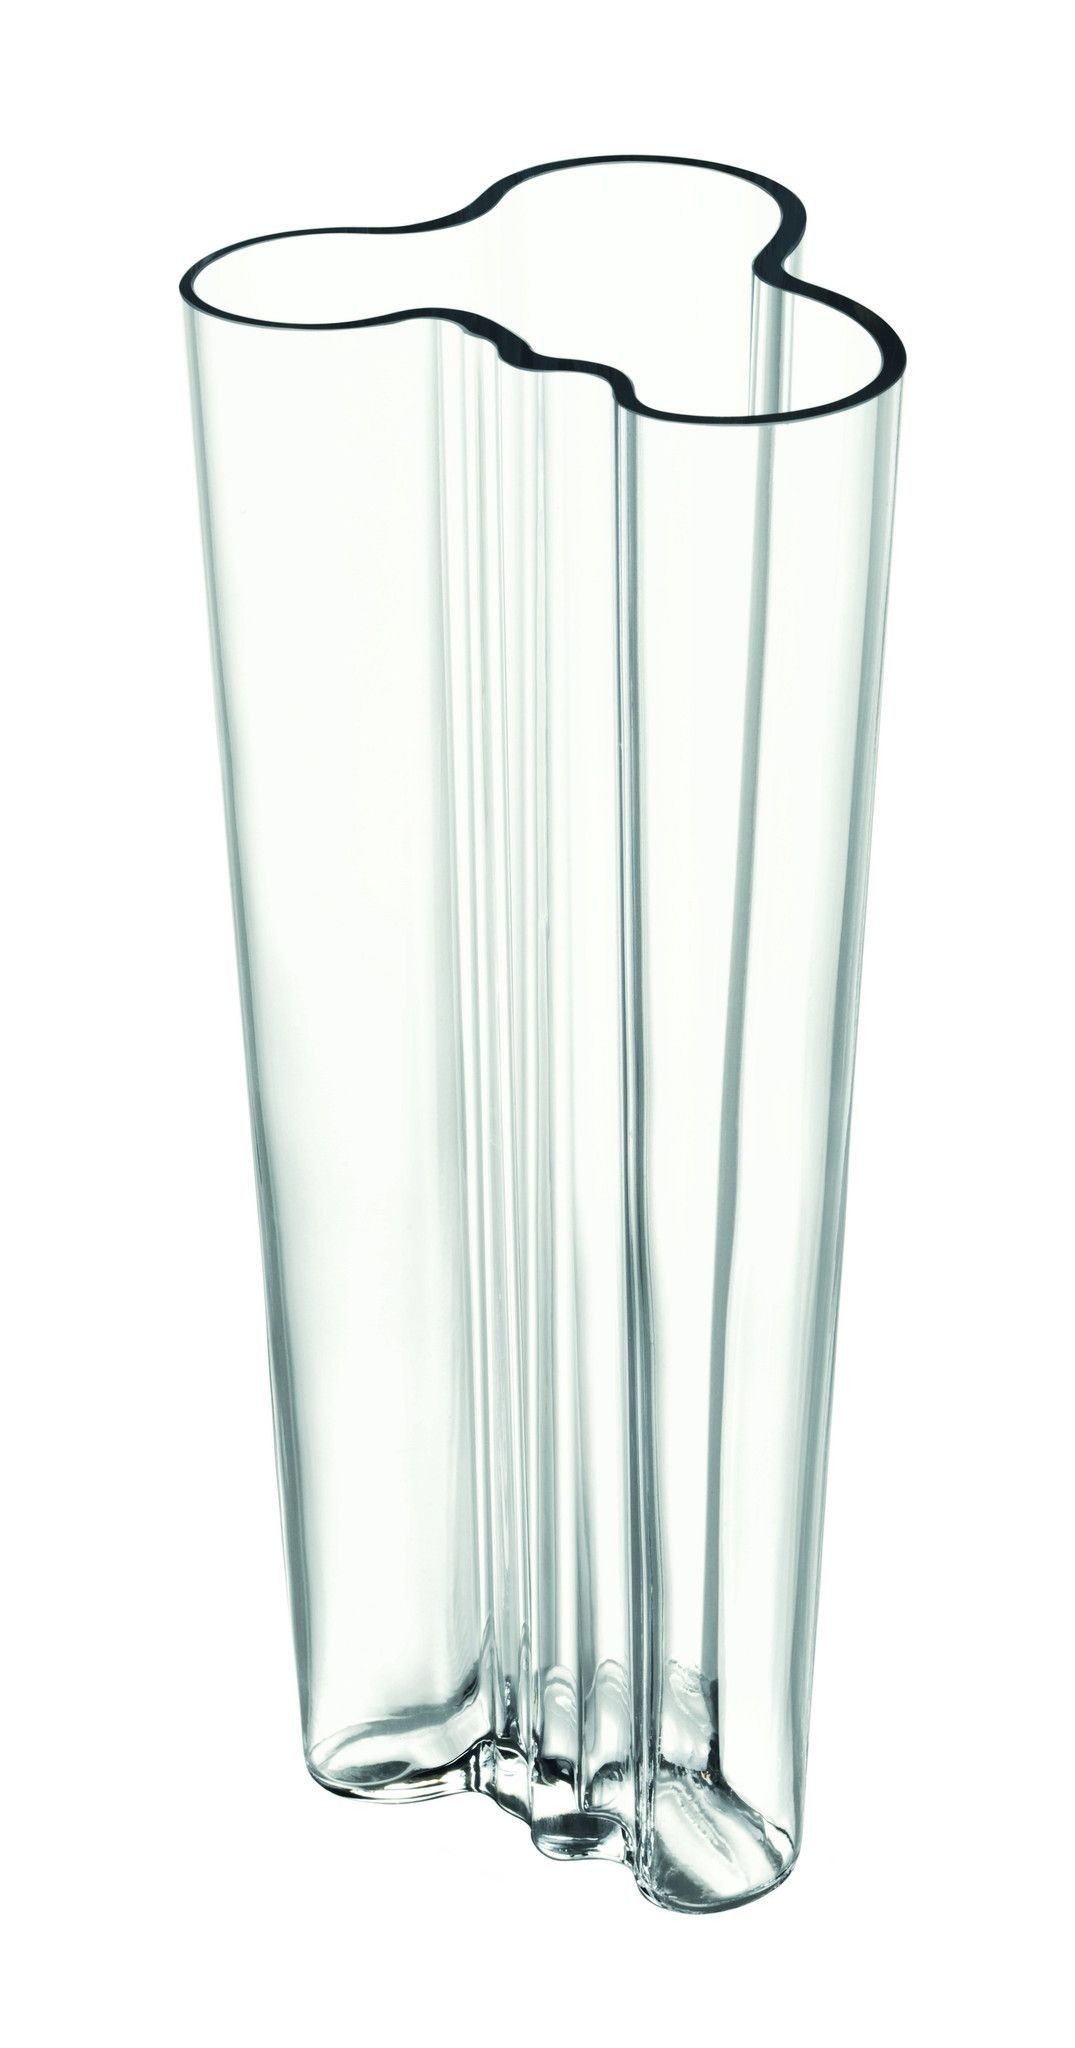 12 Trendy Alvar Aalto Vase 2024 free download alvar aalto vase of aalto 10 25 inch vase vases pinterest alvar aalto iittala and within aalto vase 10 25